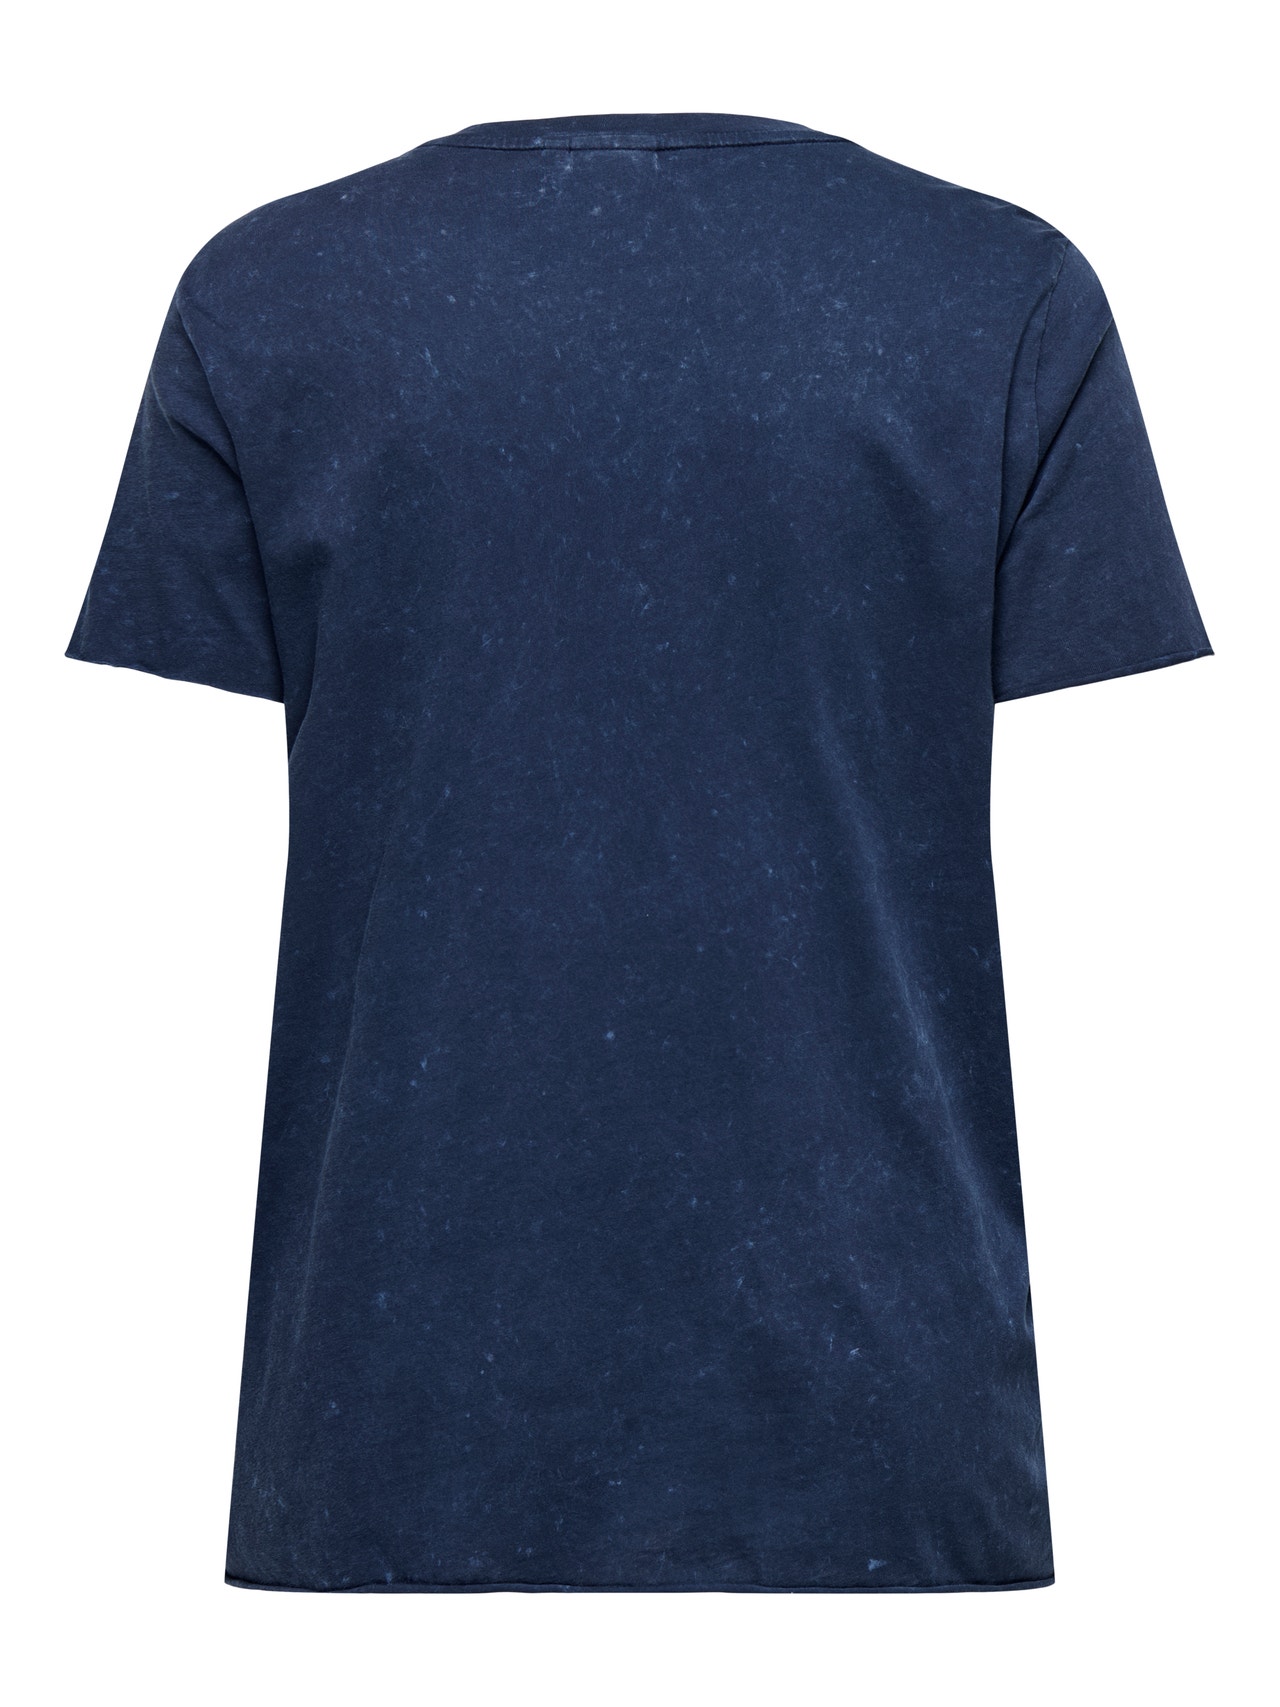 ONLY Normal geschnitten Rundhals T-Shirt -Naval Academy - 15323317